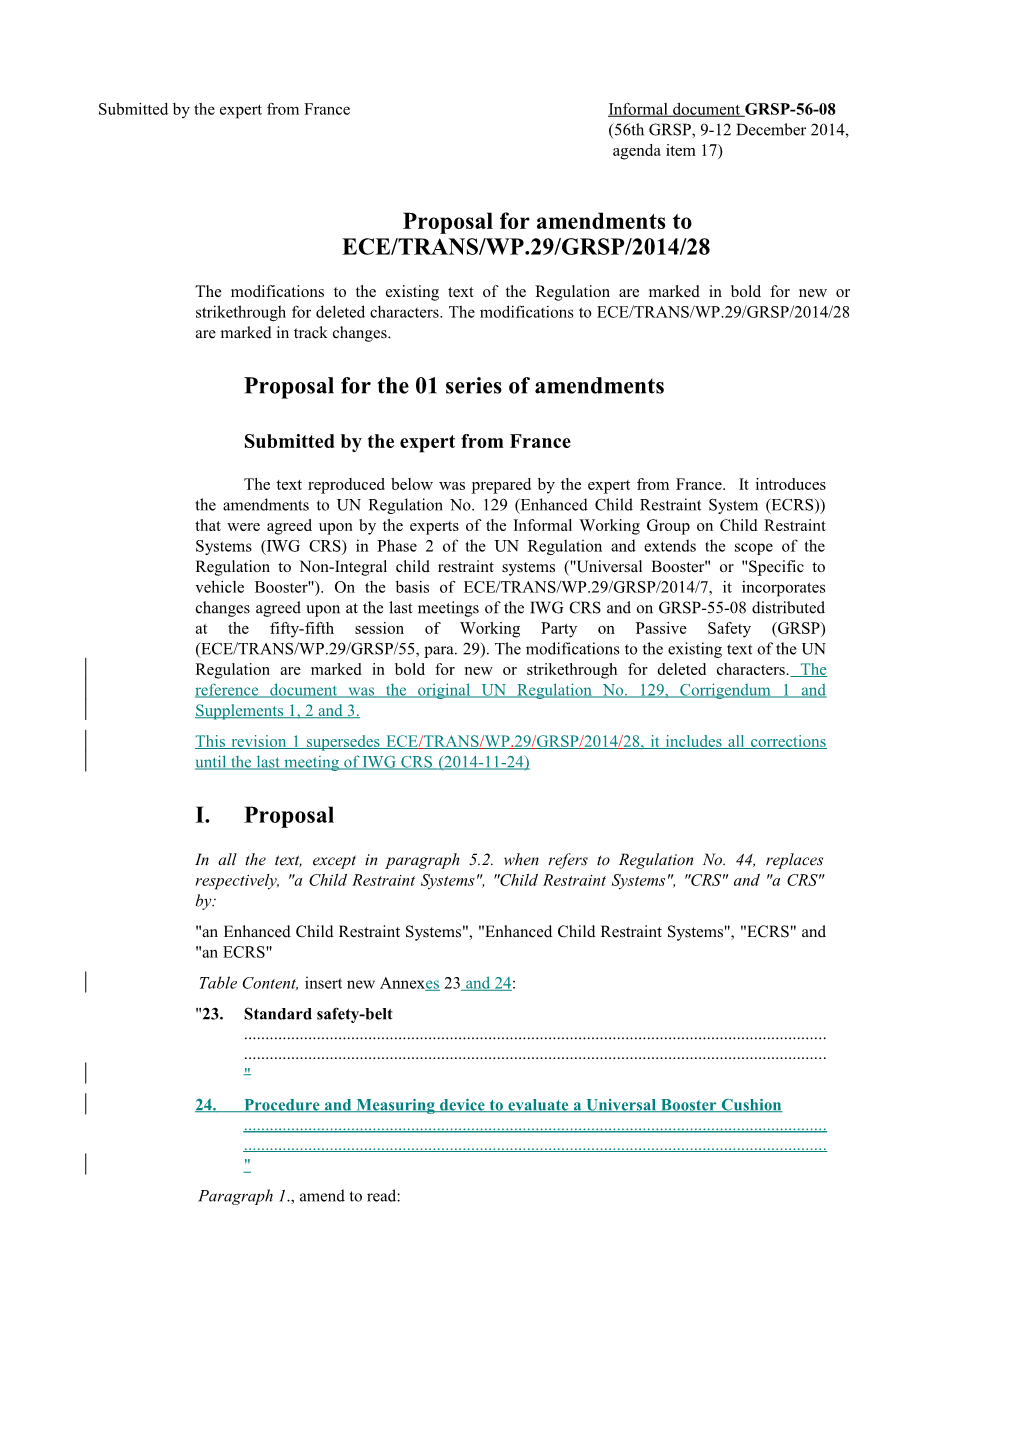 Proposal for Amendments to ECE/TRANS/WP.29/GRSP/2014/28